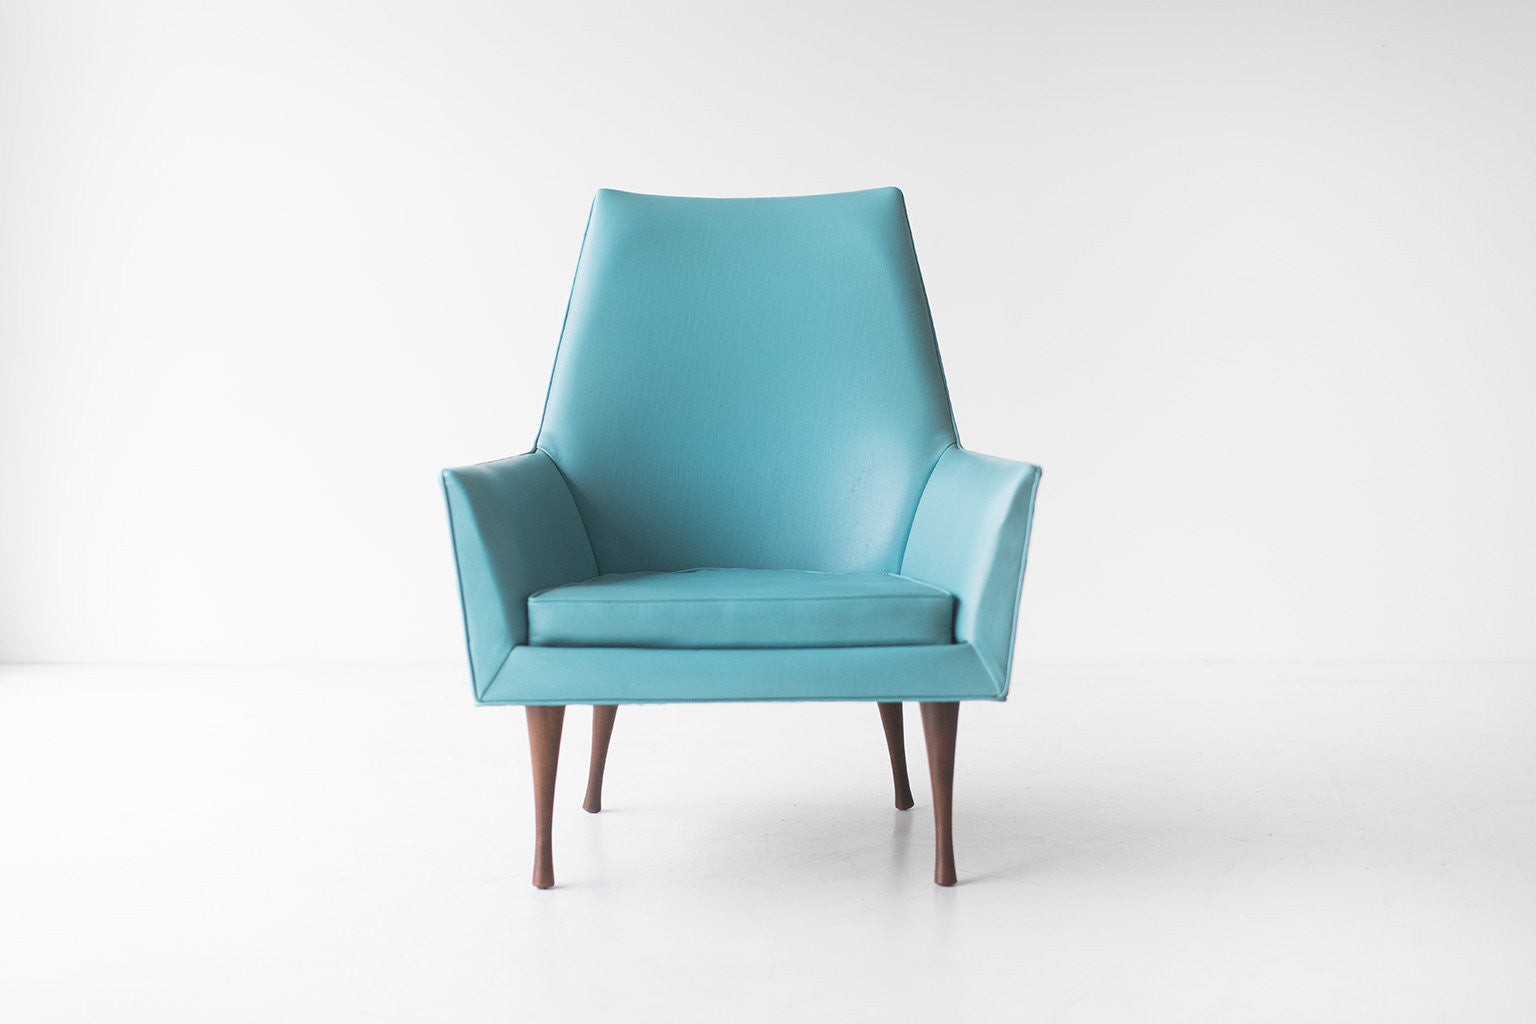 Paul-McCobb-Lounge-Chair-for-Widdicomb-Symmetric-Group-01